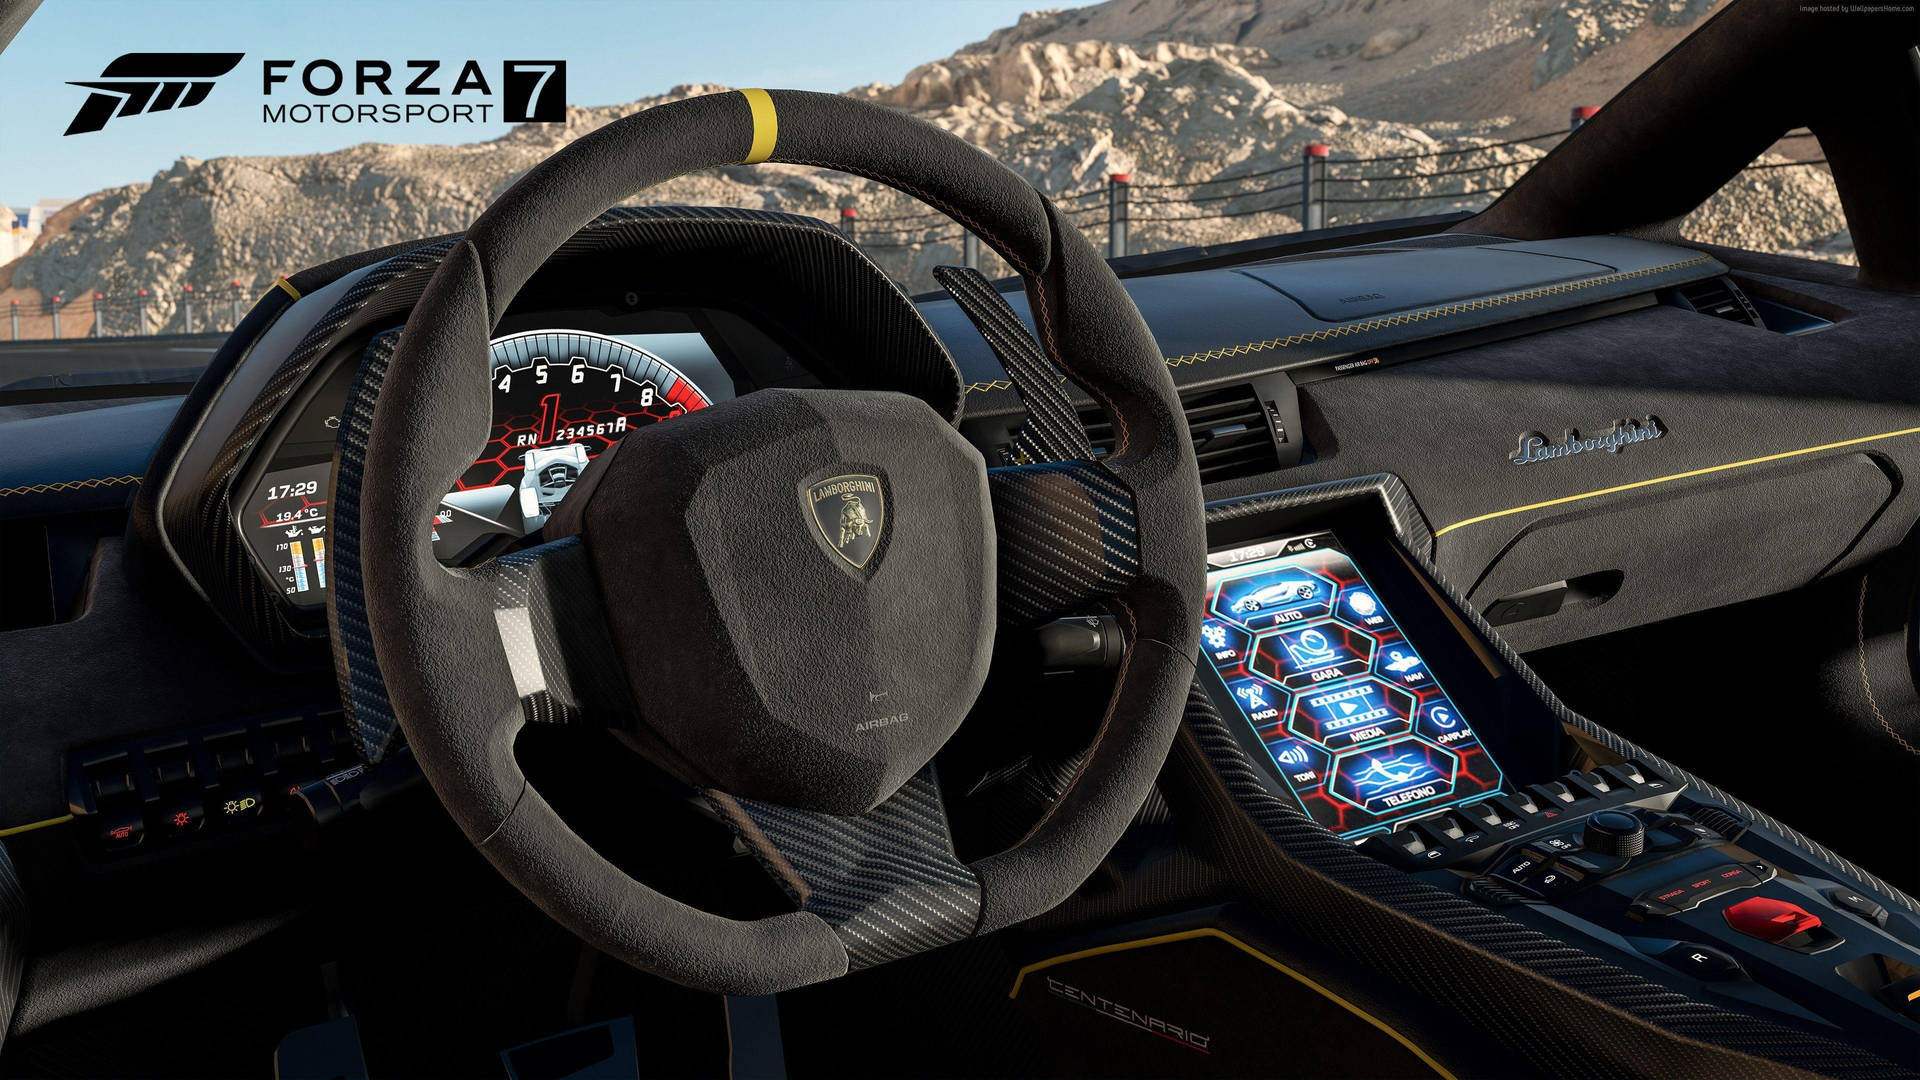 Forza 7 Steering Wheel Background